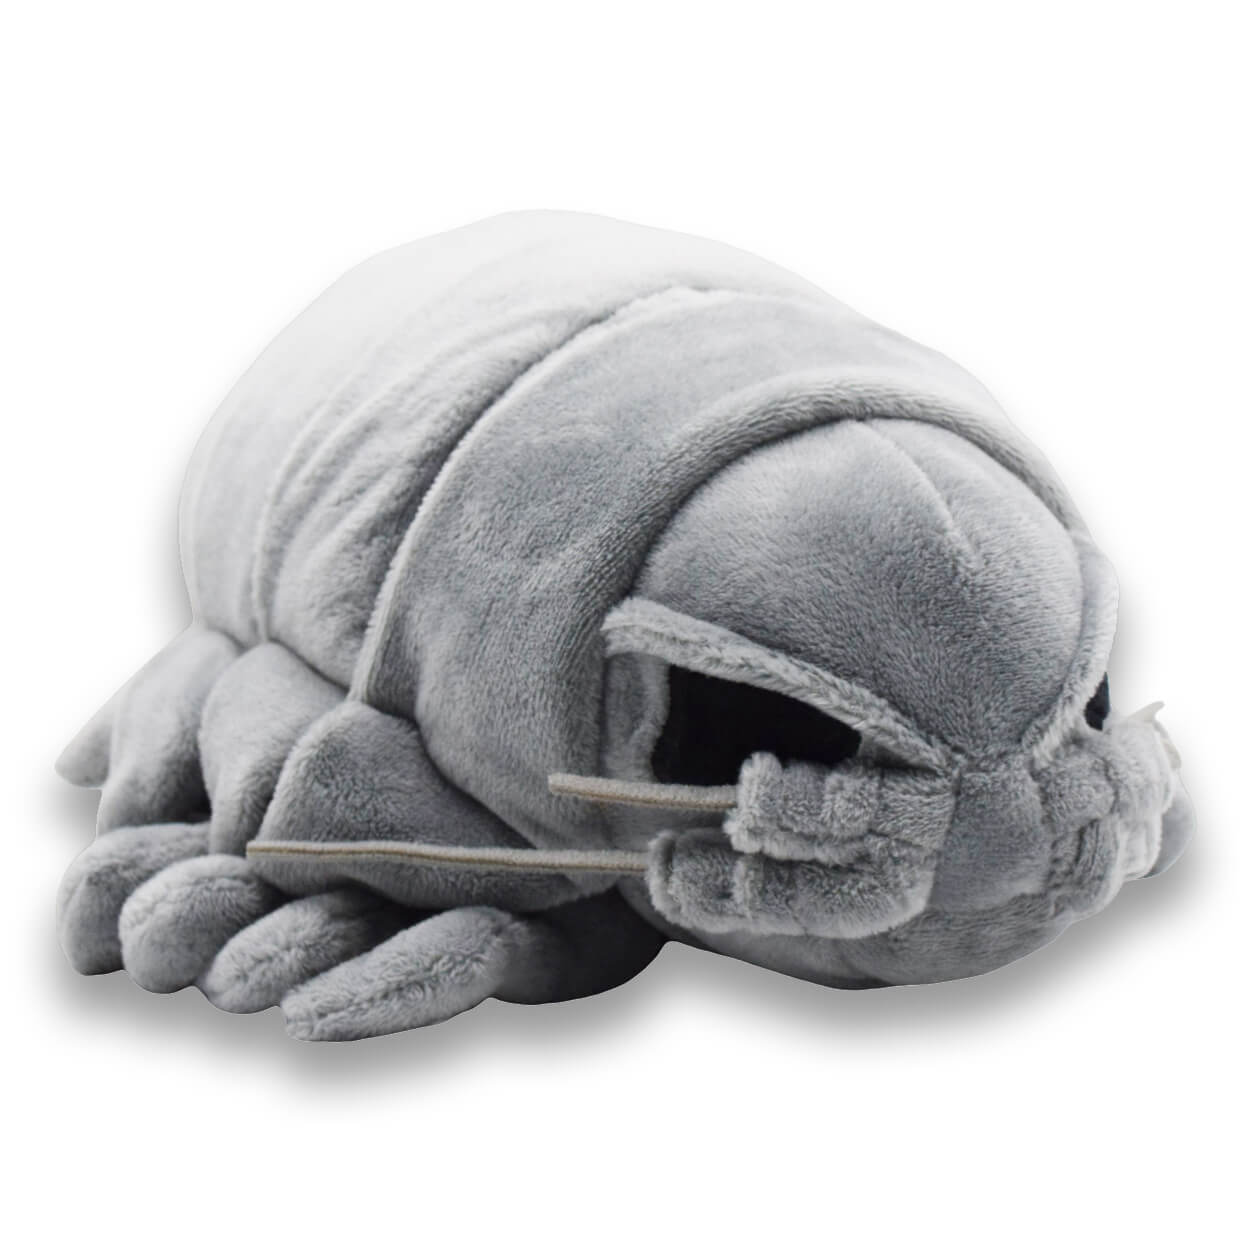 Realistic Giant isopod Stuffed Animal Plush Toy